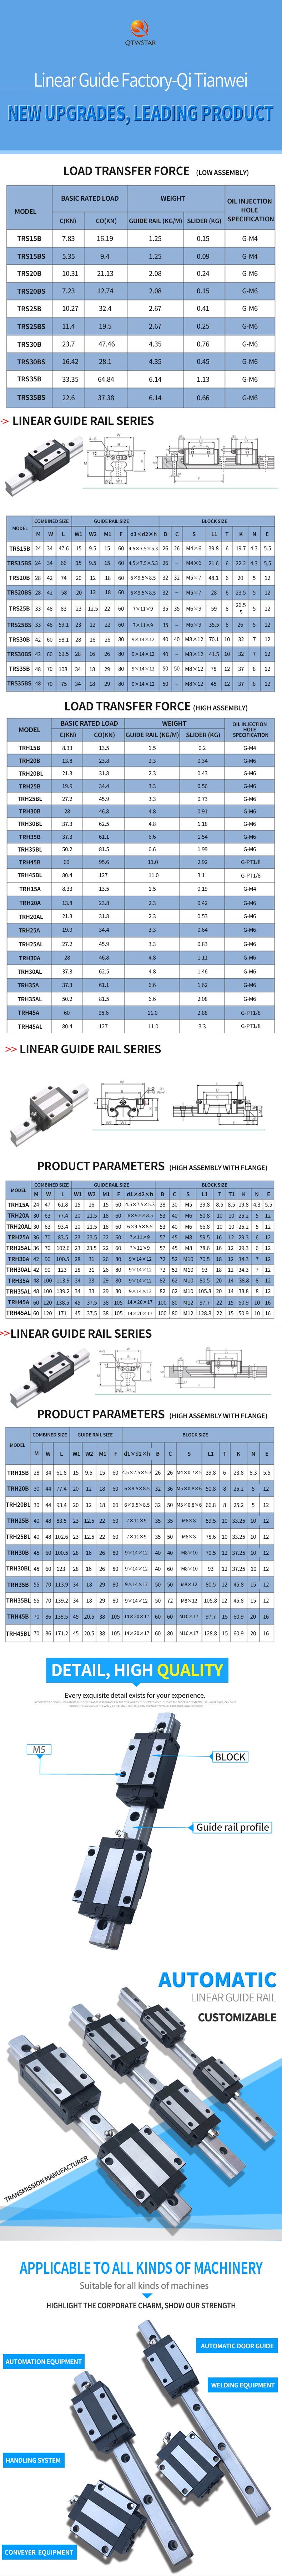 Guide Rail Picture, Yintai Guide Rail, Guide Rail Pressing Block, Guide Rail Power Supply, Guide Rail